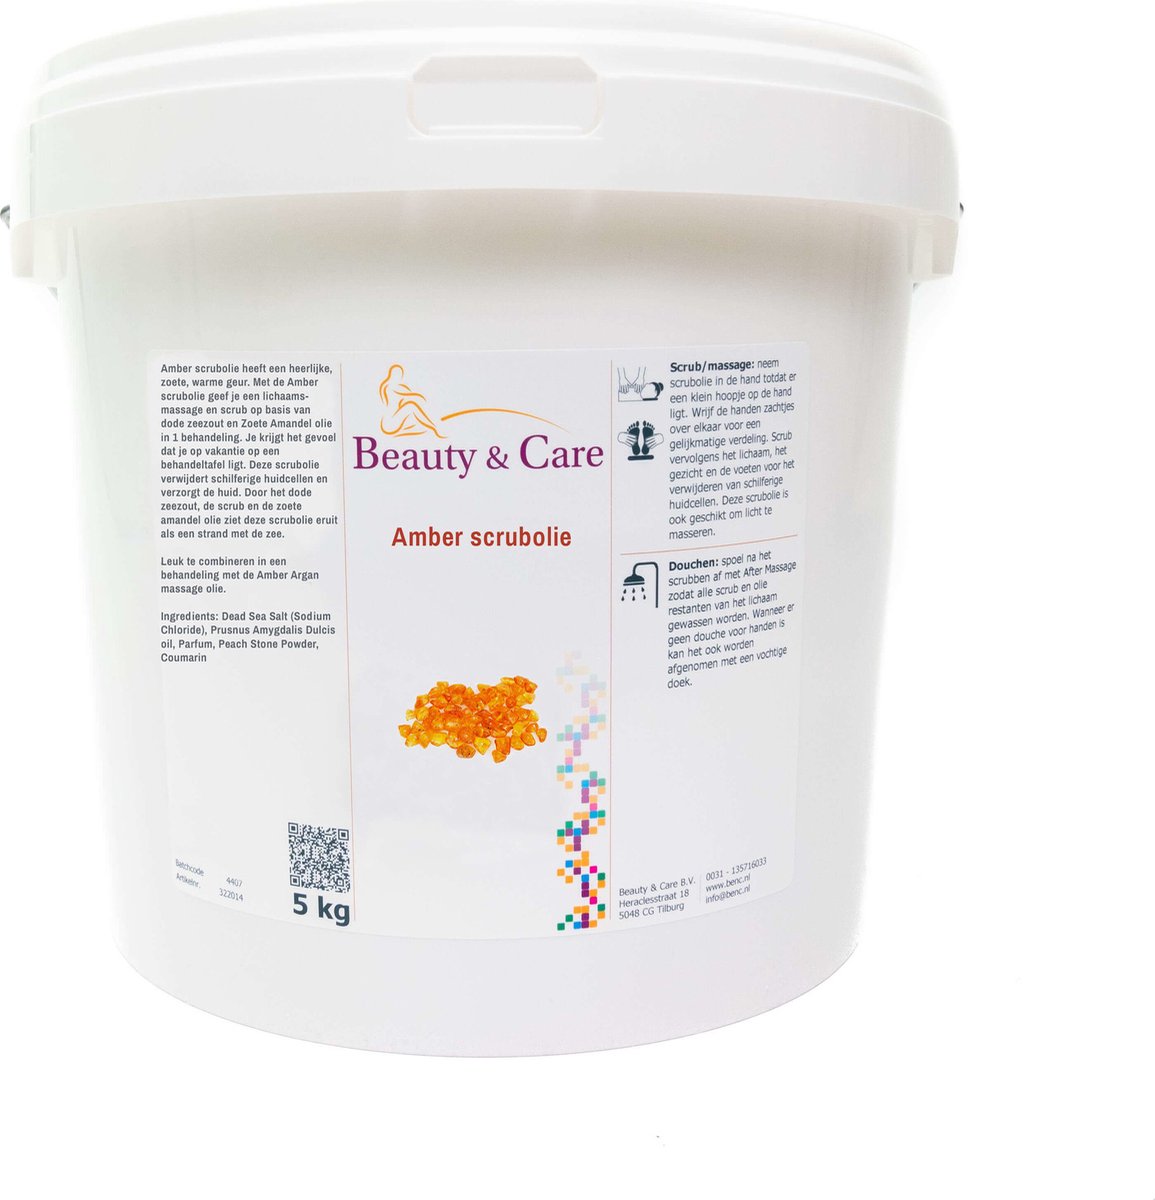 Beauty & Care - Amber Body Scrub Oil 5 kg - 5 kg. new